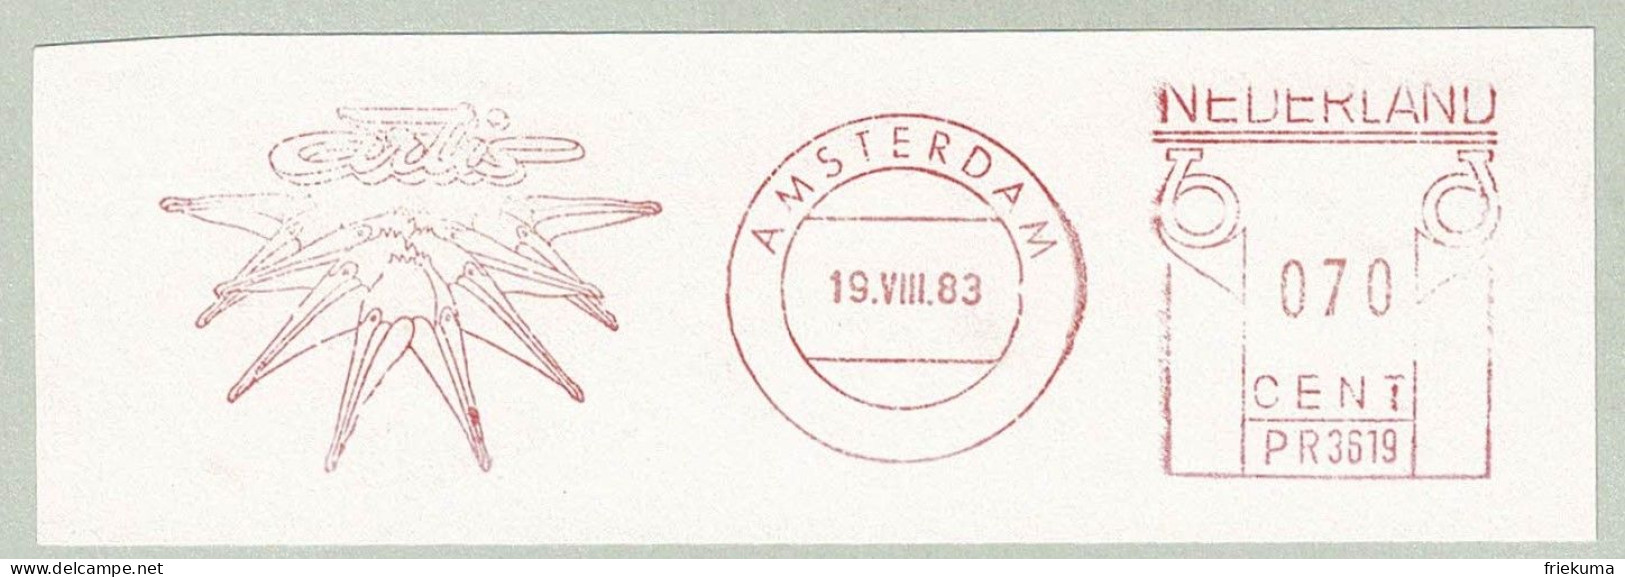 Niederlande / Nederland 1983, Freistempel / EMA / Meterstamp Amsterdam, Pelikane / Pelicans / Pelecanus - Pelikane